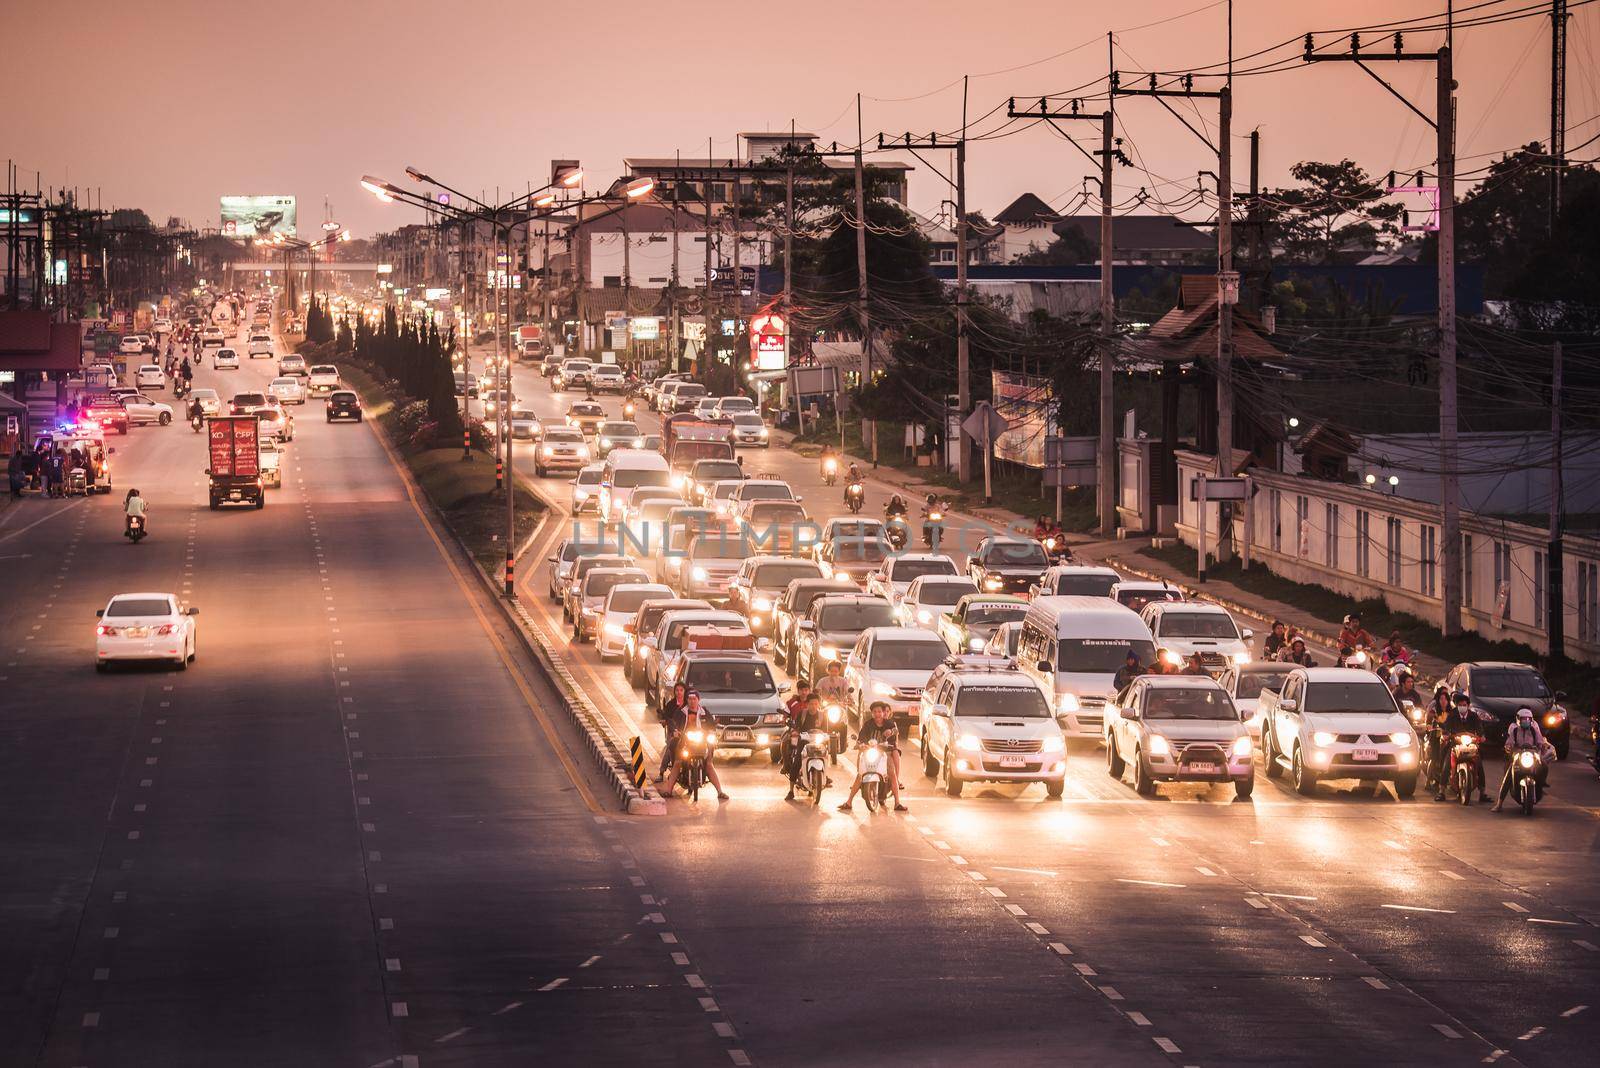 Thailand, Chiang rai - February 5 2016: Evening road traffic in Chiang rai by Wmpix